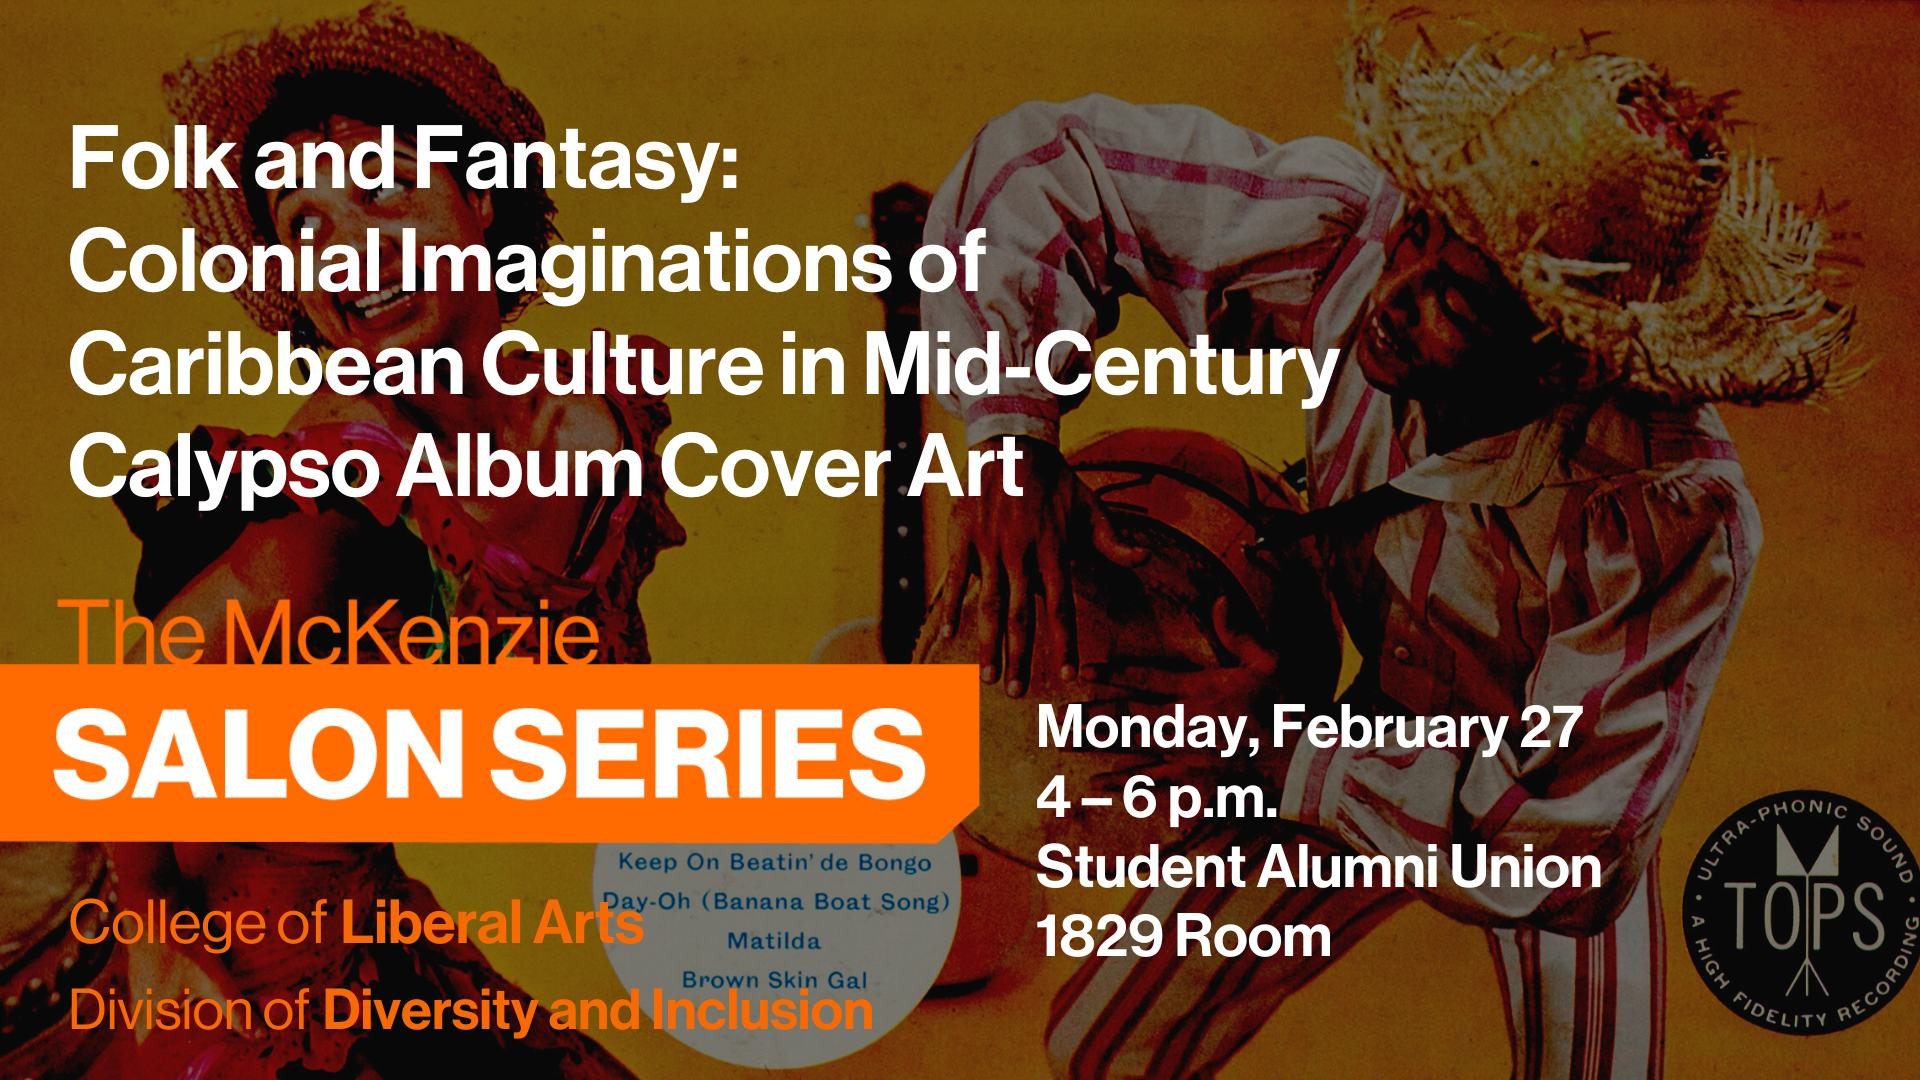 McKenzie Salon Series | Folk and Fantasy: Colonial Imaginations of Caribbean Culture in Mid-Century Calypso Album Cover Art February 27 4-6 p.m.